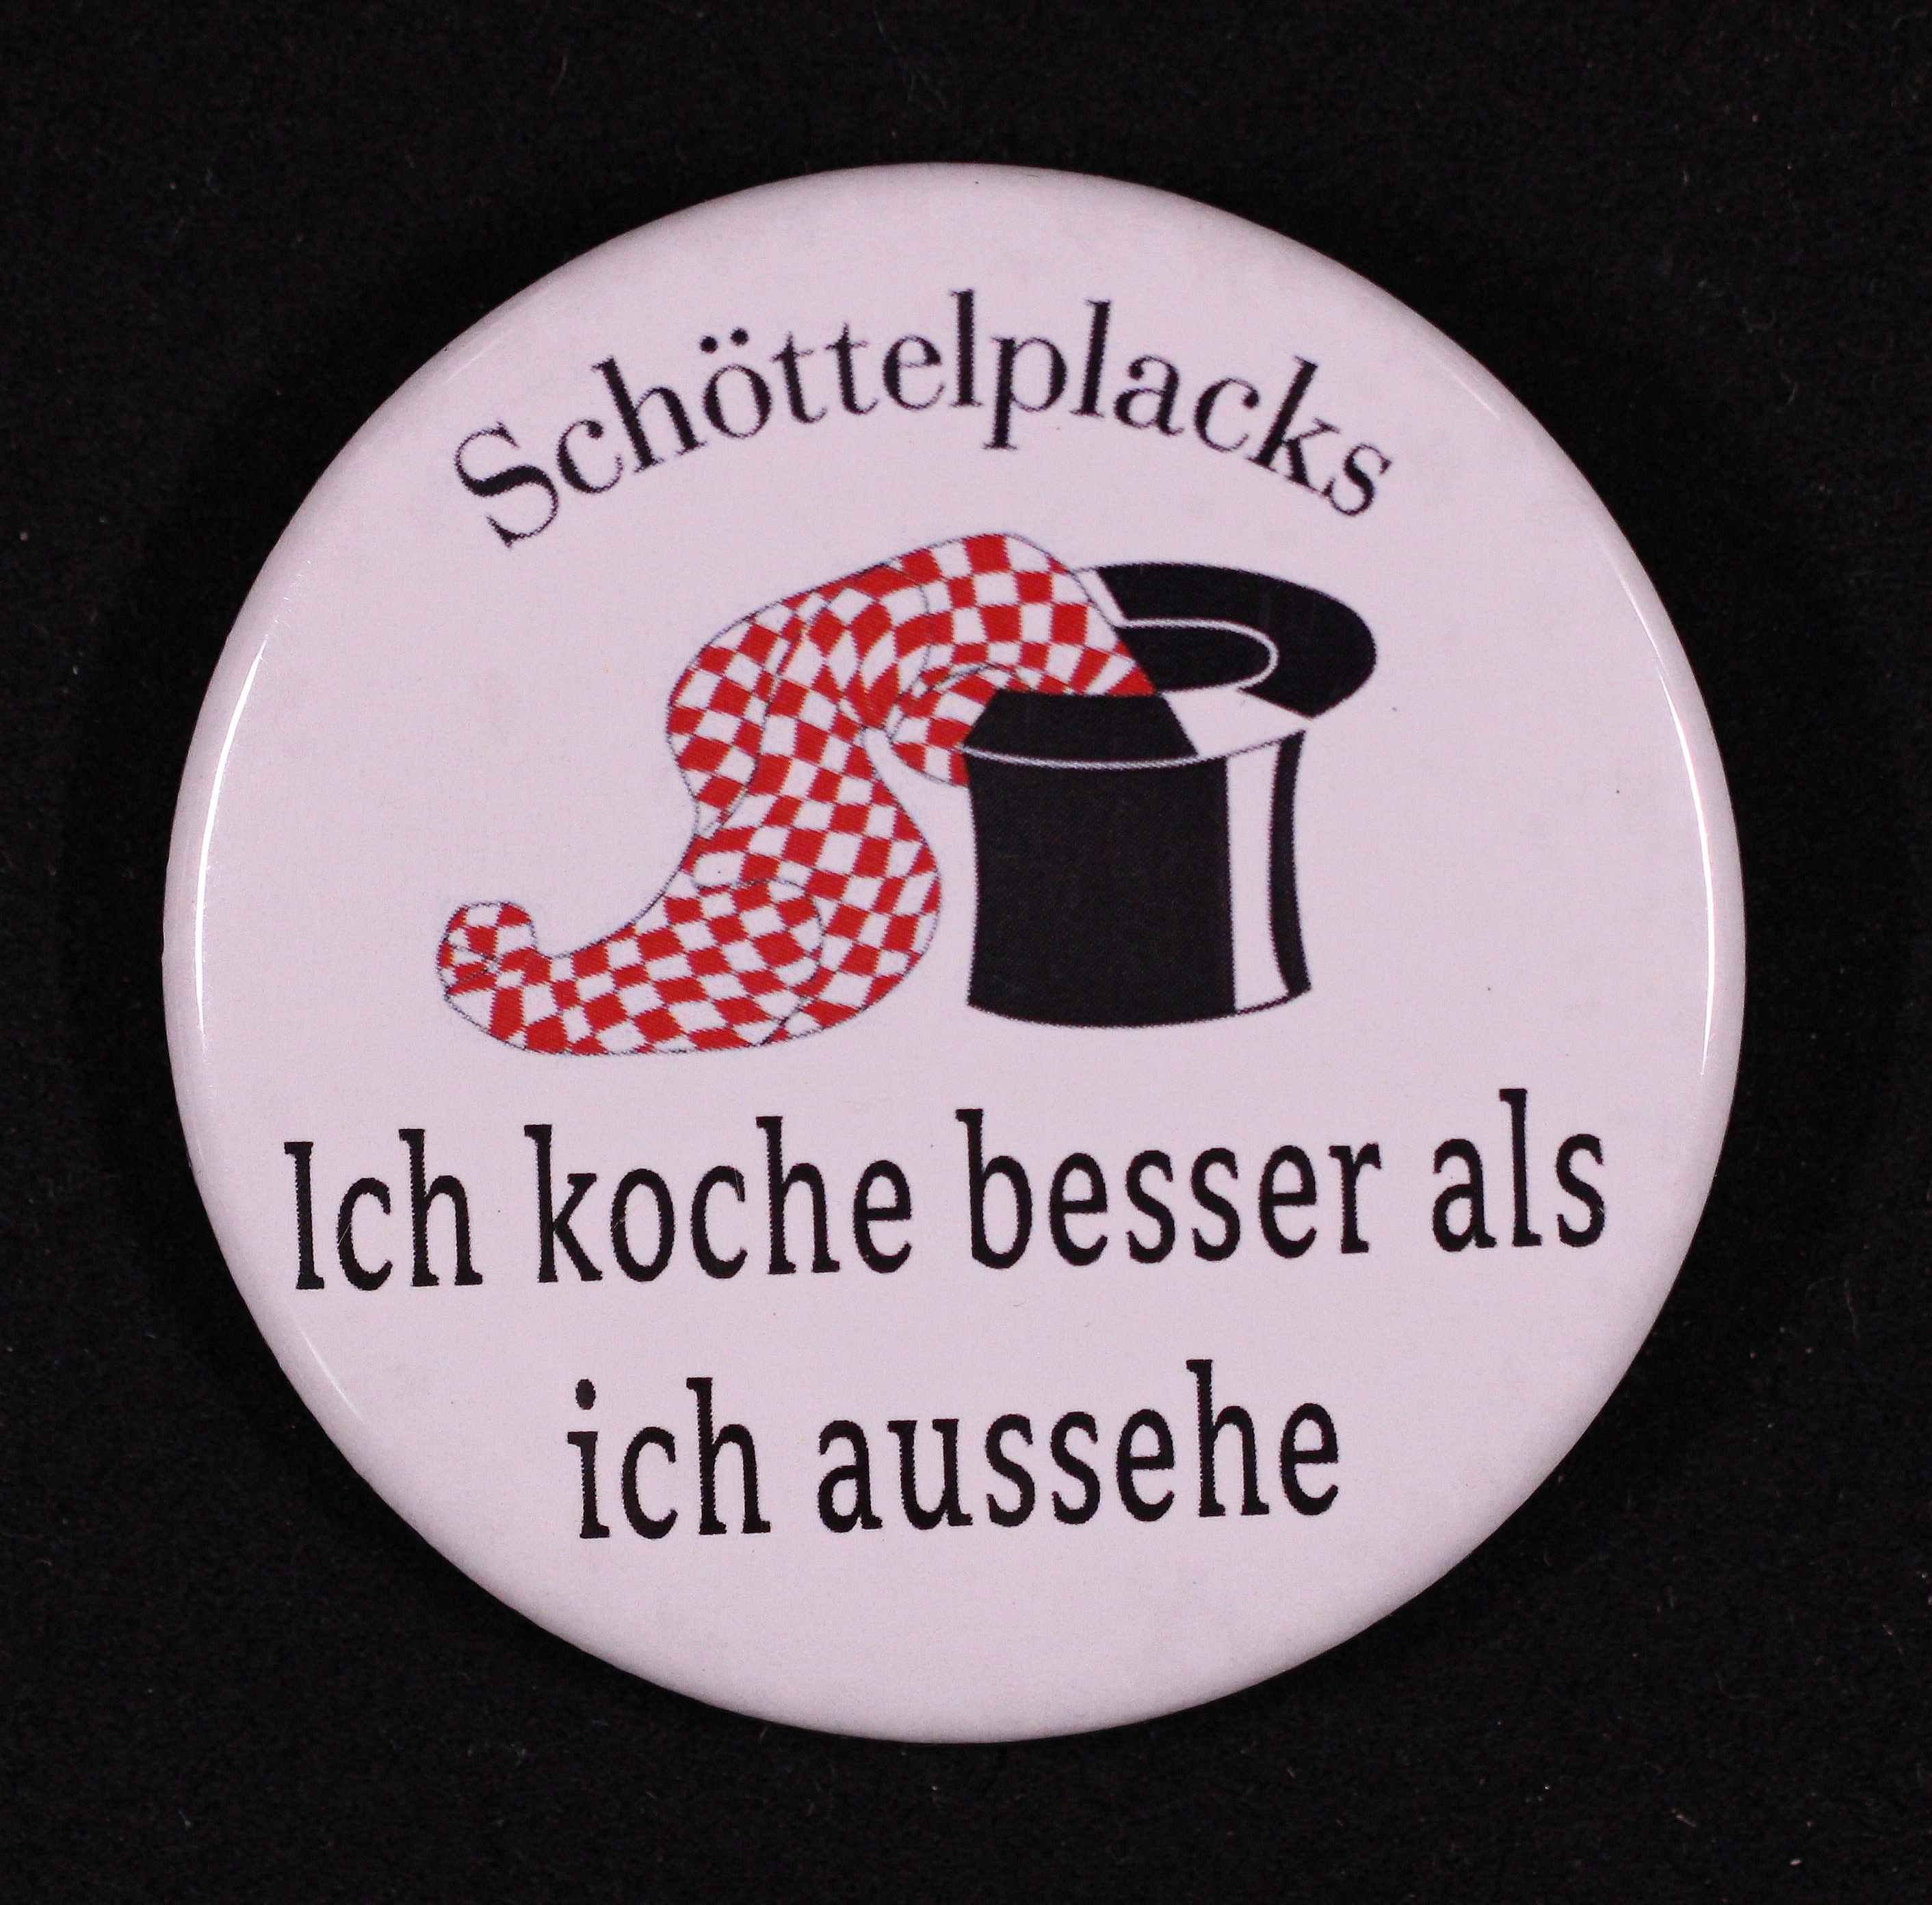 Button Neuss Grenadierzug "Schöttelplacks" (Kochen) VS (Rheinisches Schützenmuseum Neuss CC BY-NC-SA)